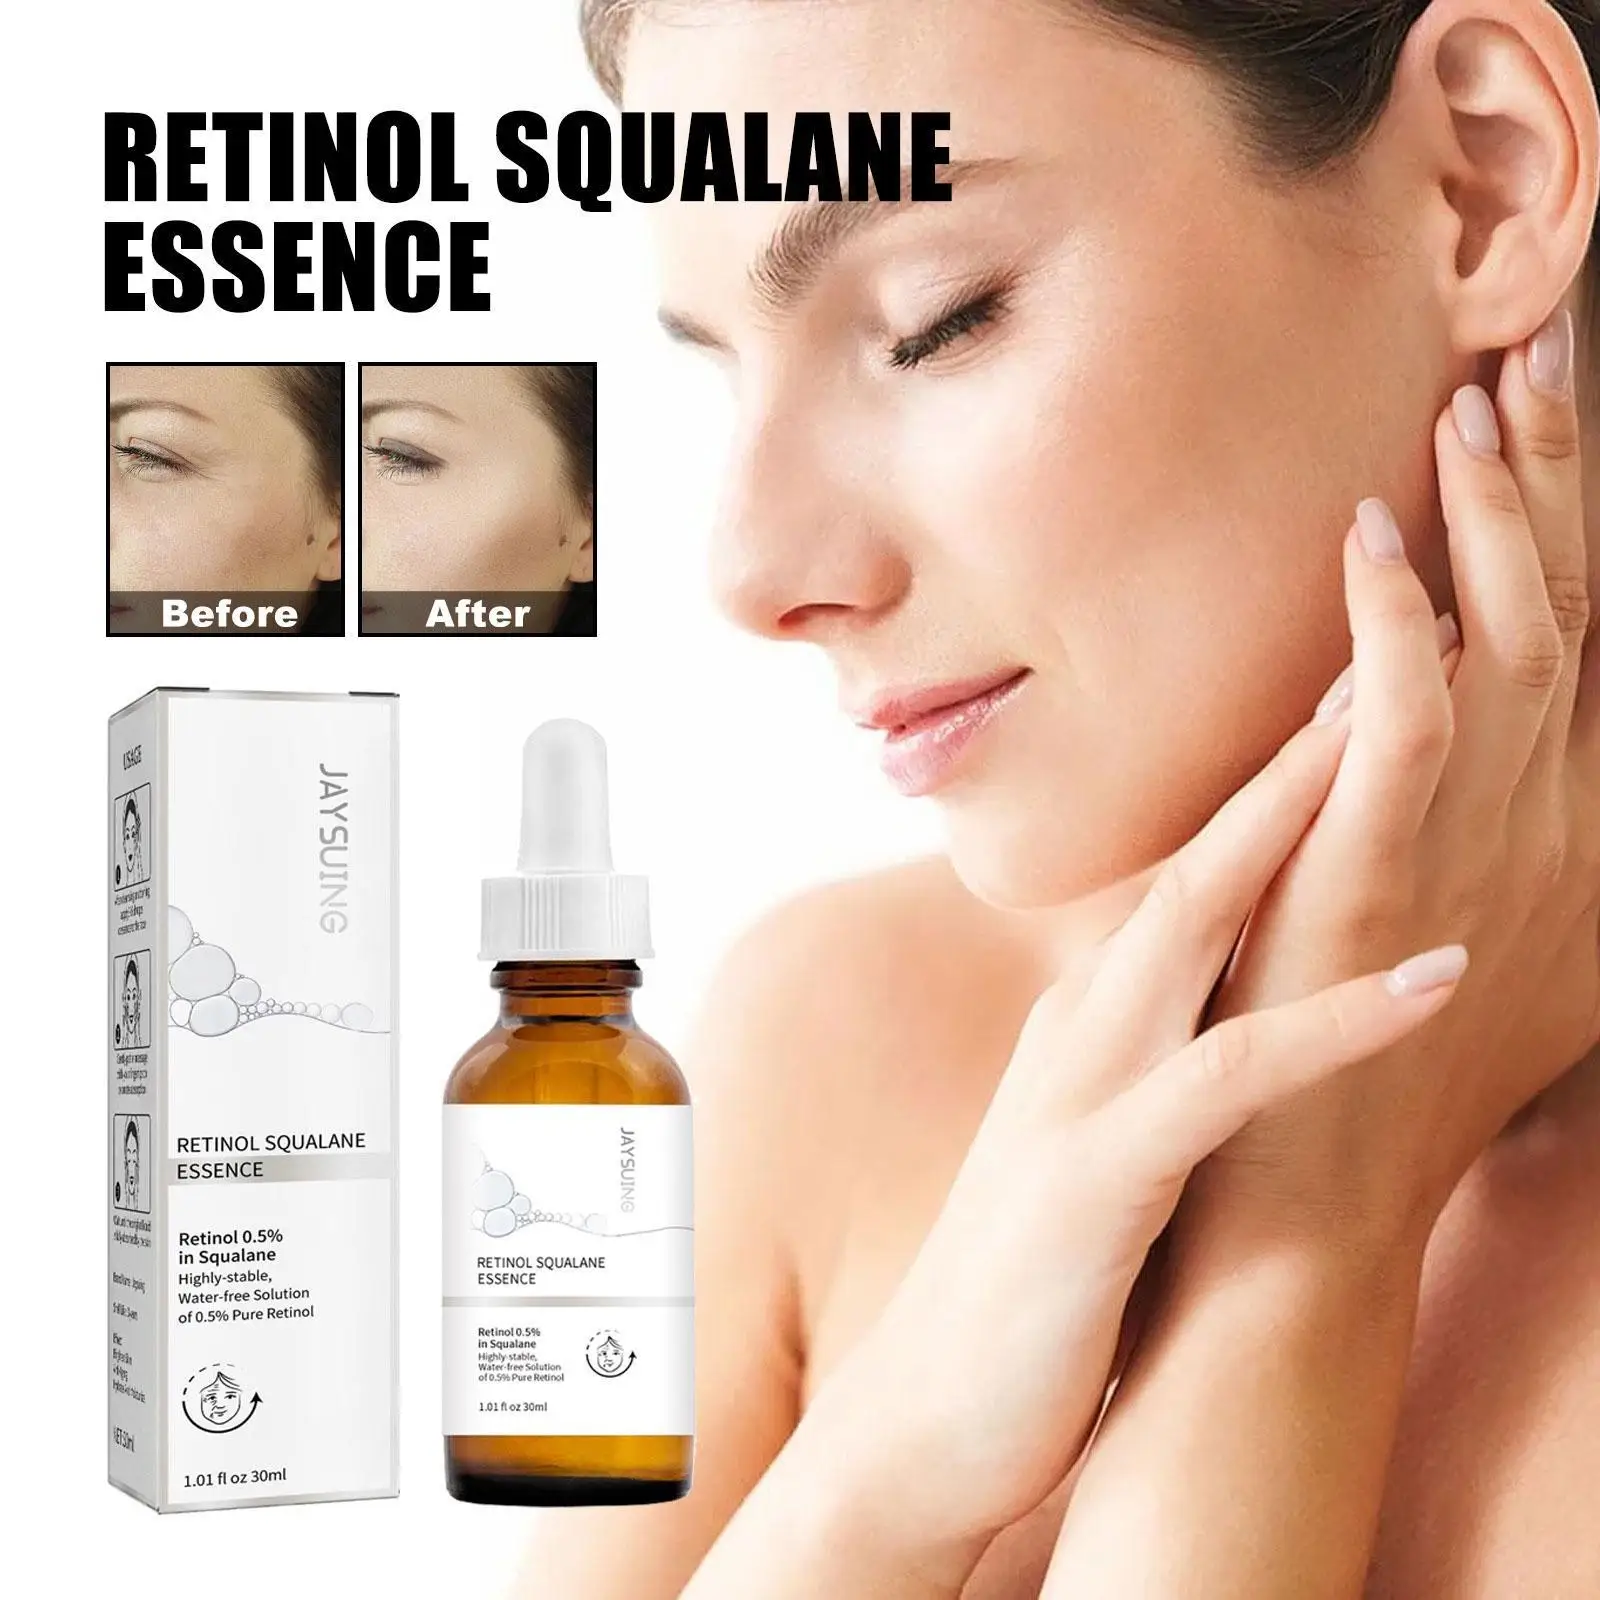 

30ml Retinol 0.5% Squalane Essence Anti Aging Reduce Wrinkles Fine Lines Firming Skin Care Brighten Dark Spots Beauty Products